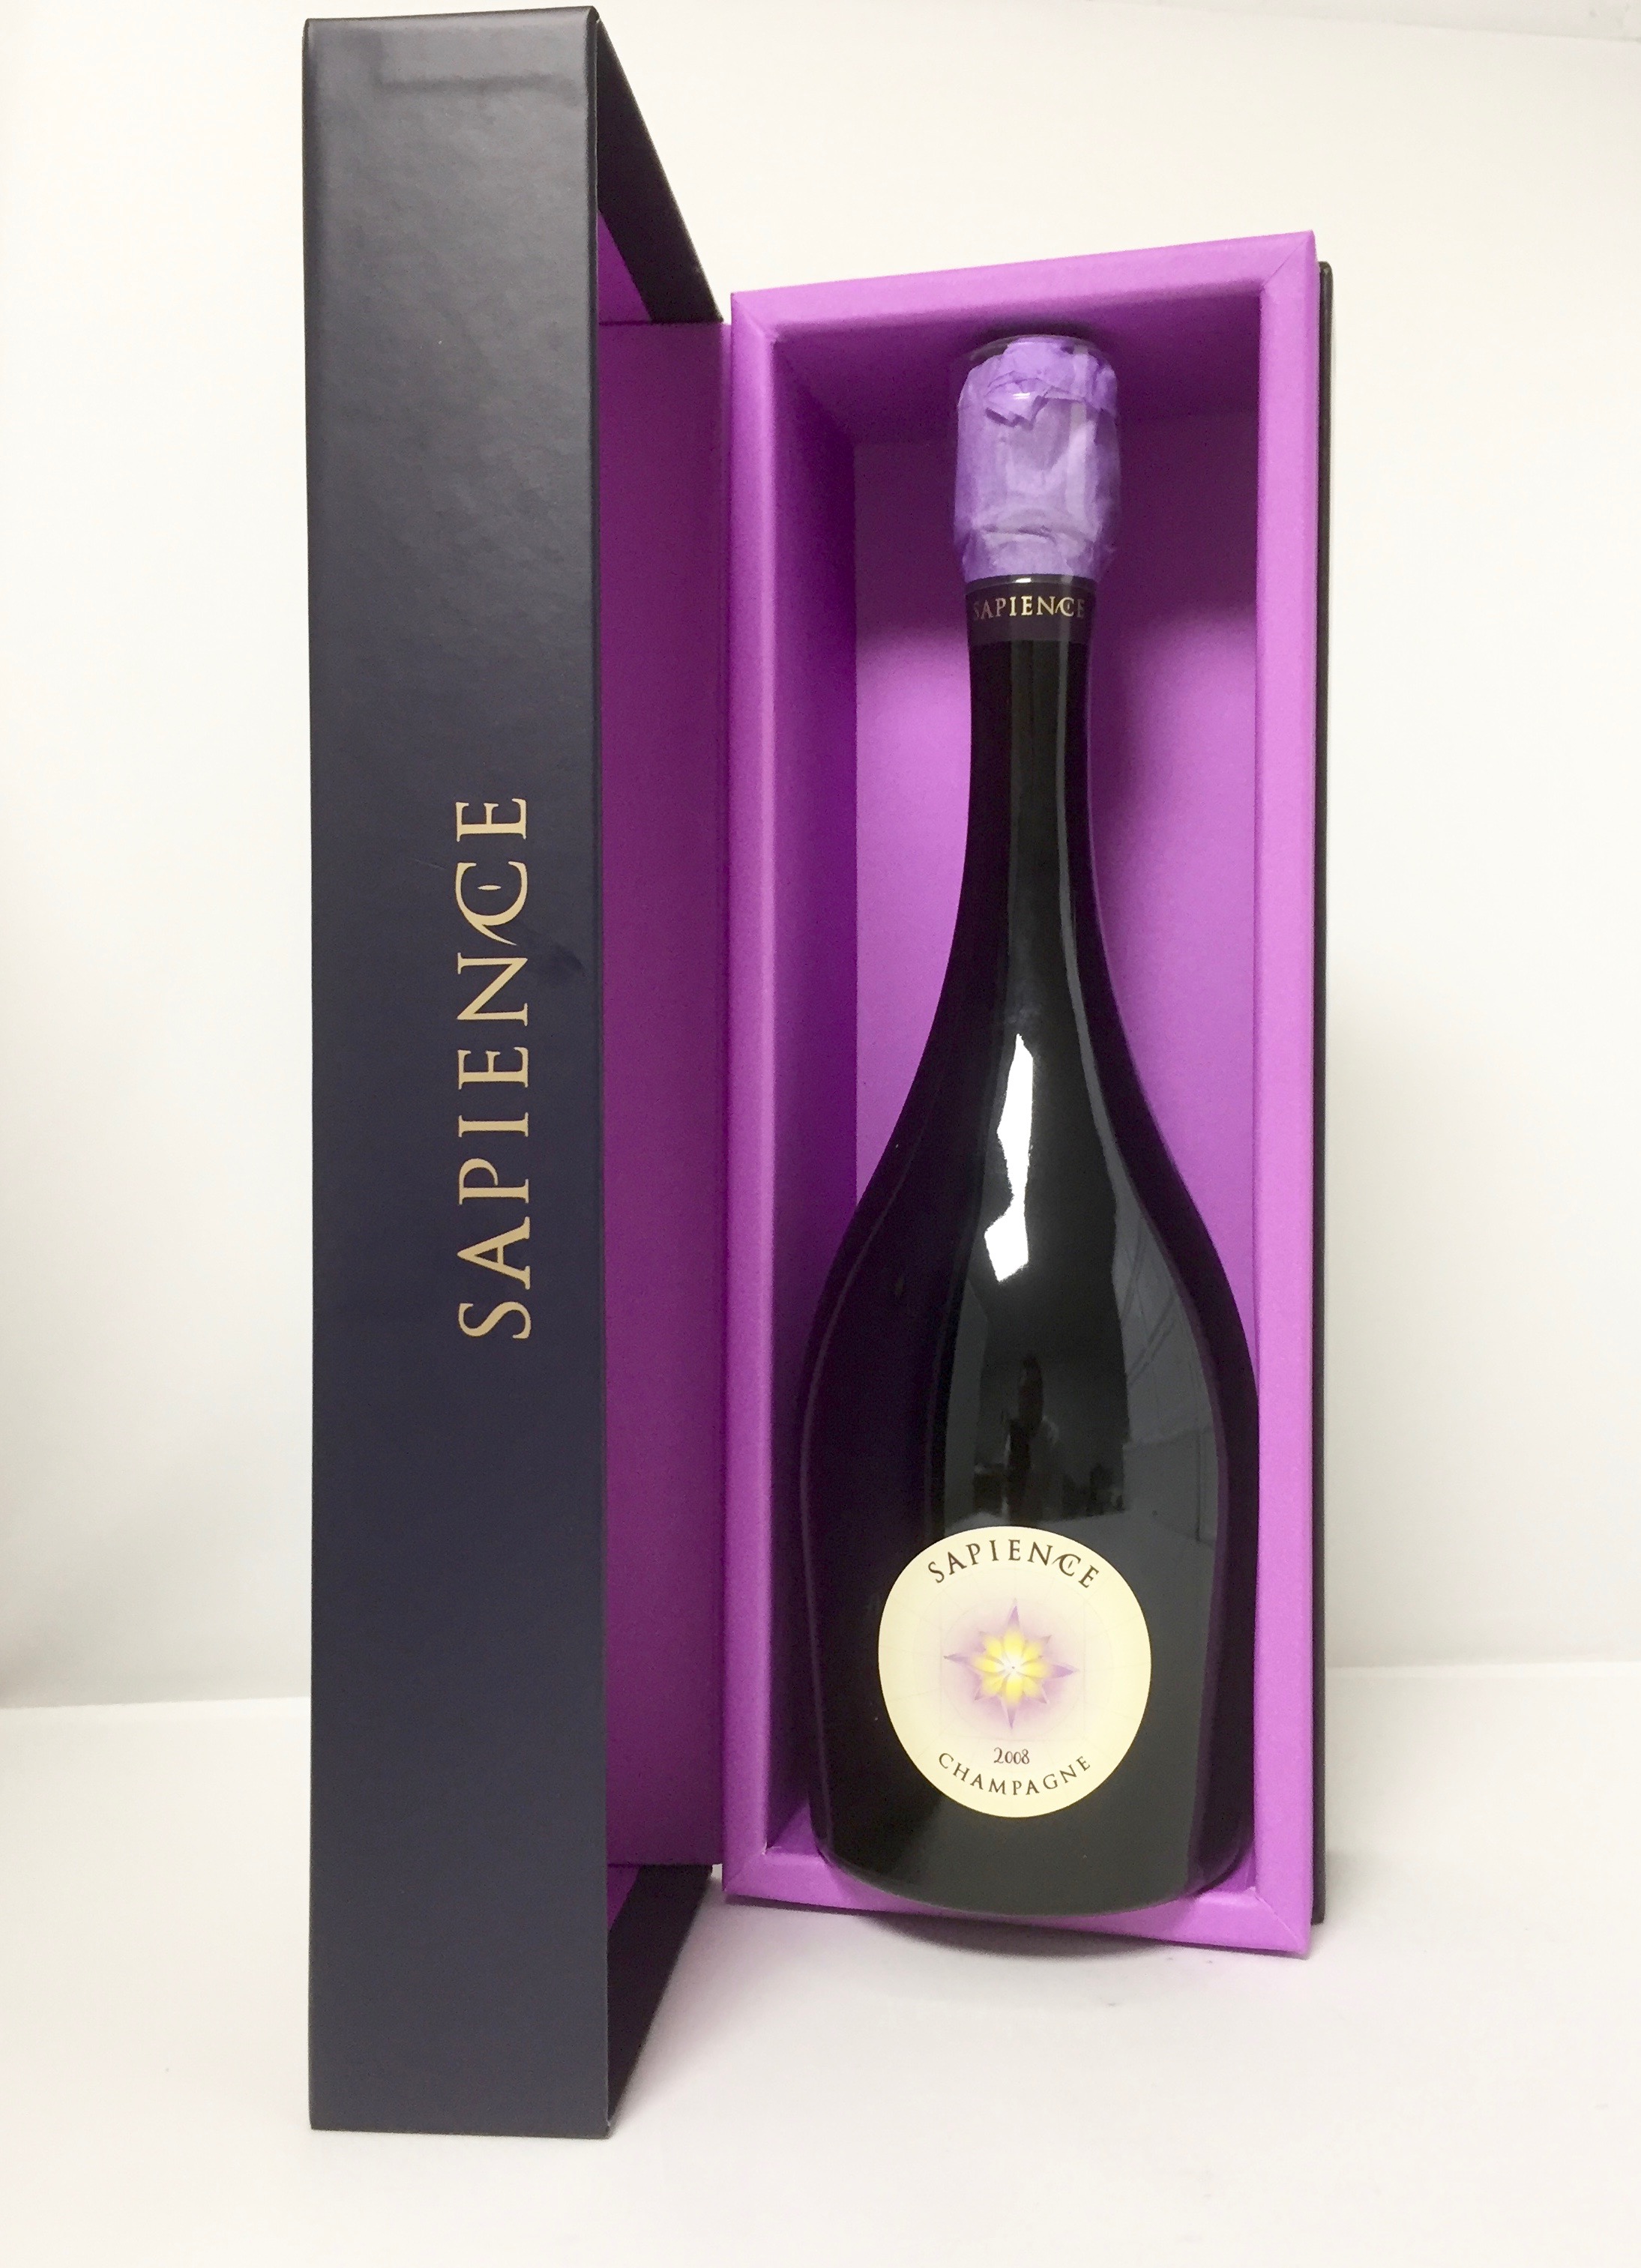 2010 Marguet premier Cru Brut Champagne Sapience - click image for full description